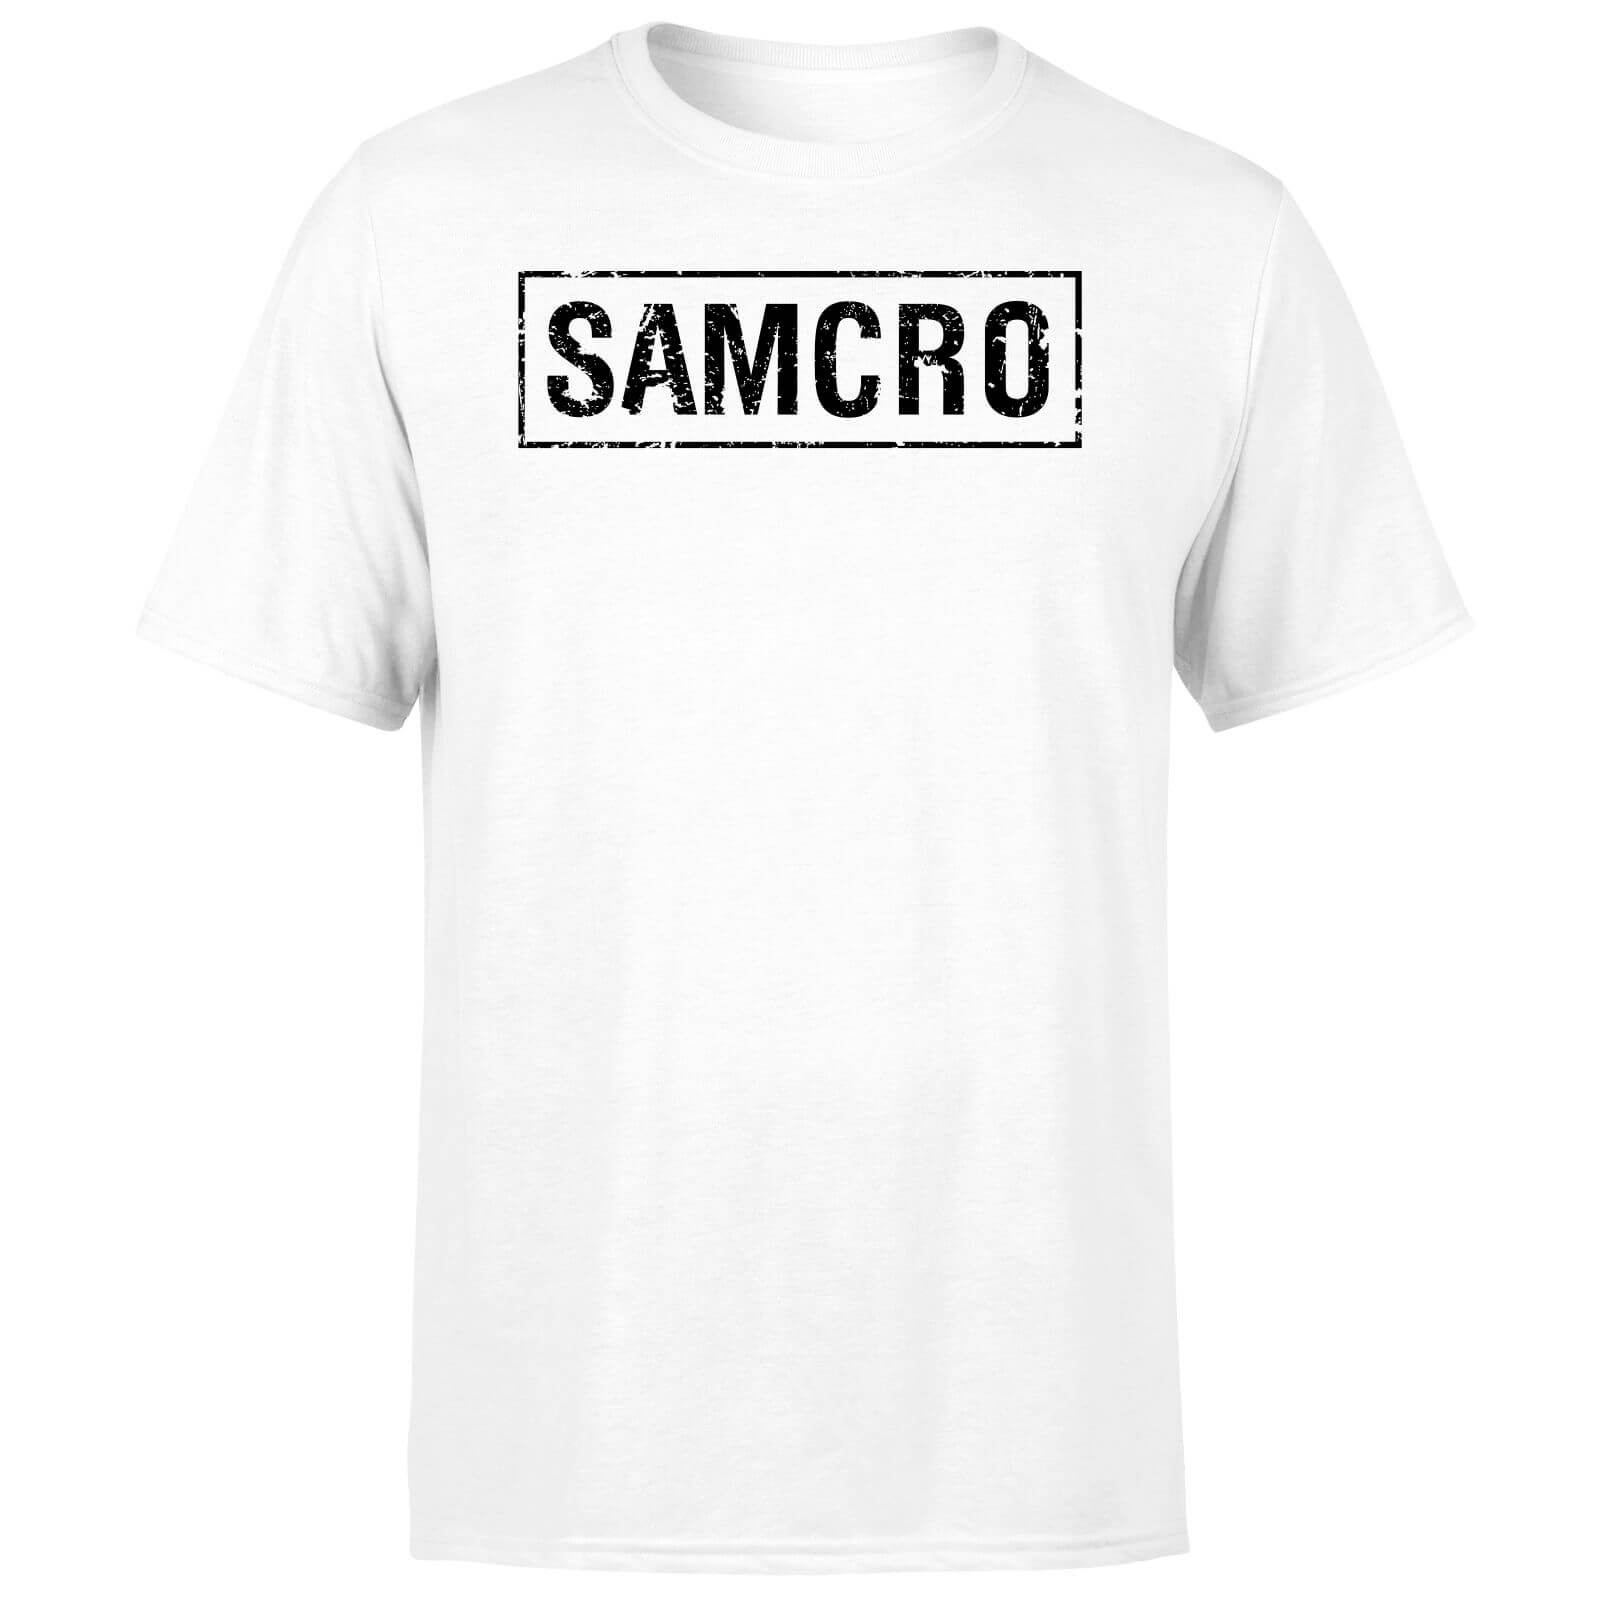 Sons of Anarchy SAMCRO Box Men's T-Shirt - White - XXL - White